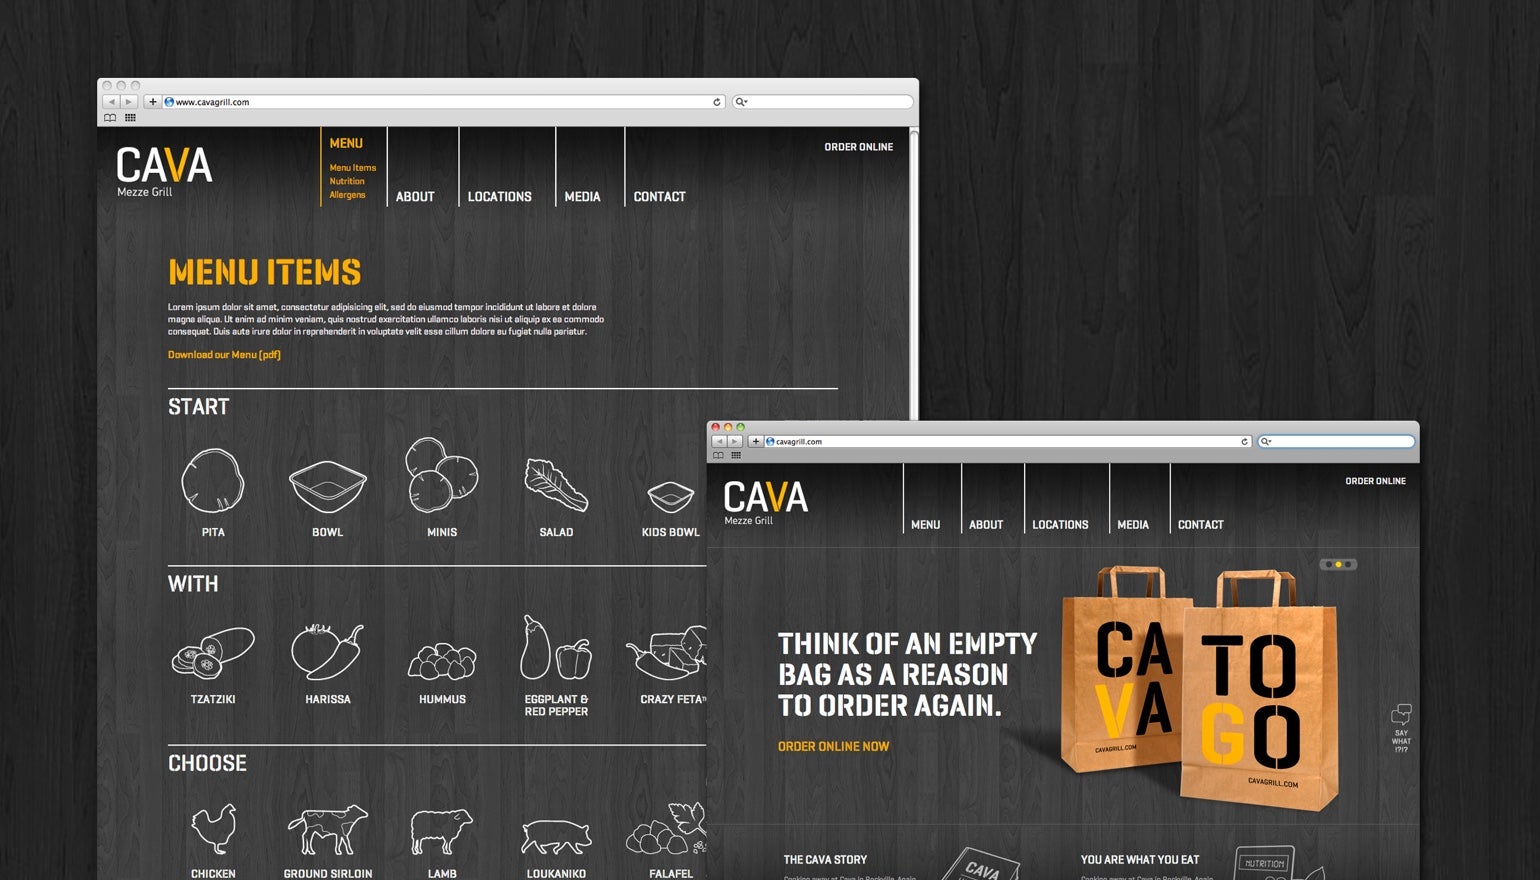 REQ Cava Website Design